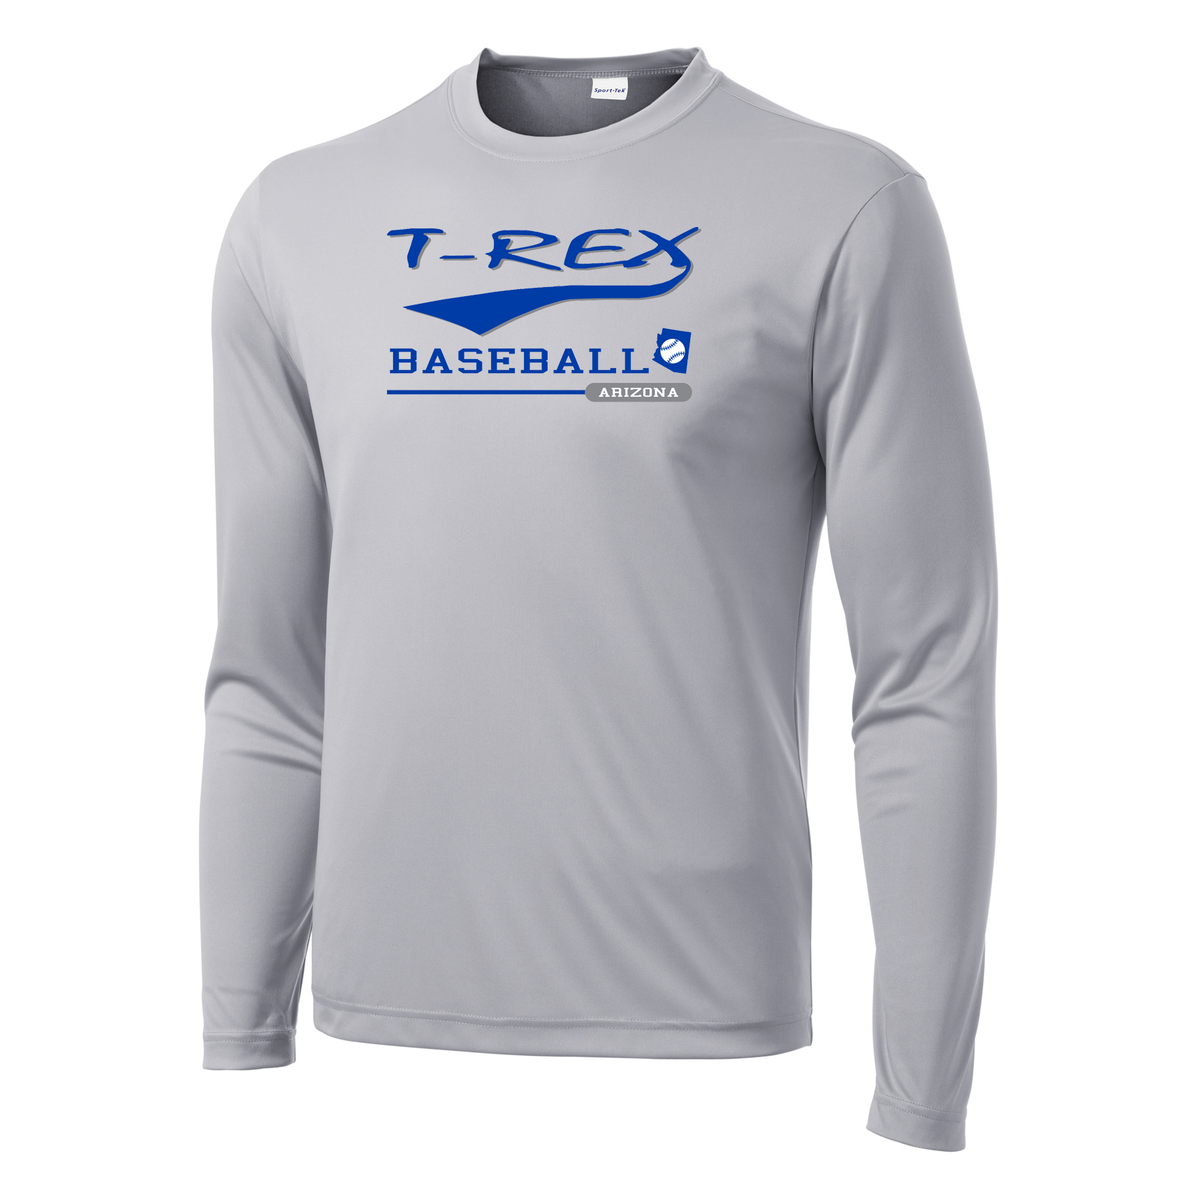 T-Rex Baseball Long Sleeve Performance Shirt